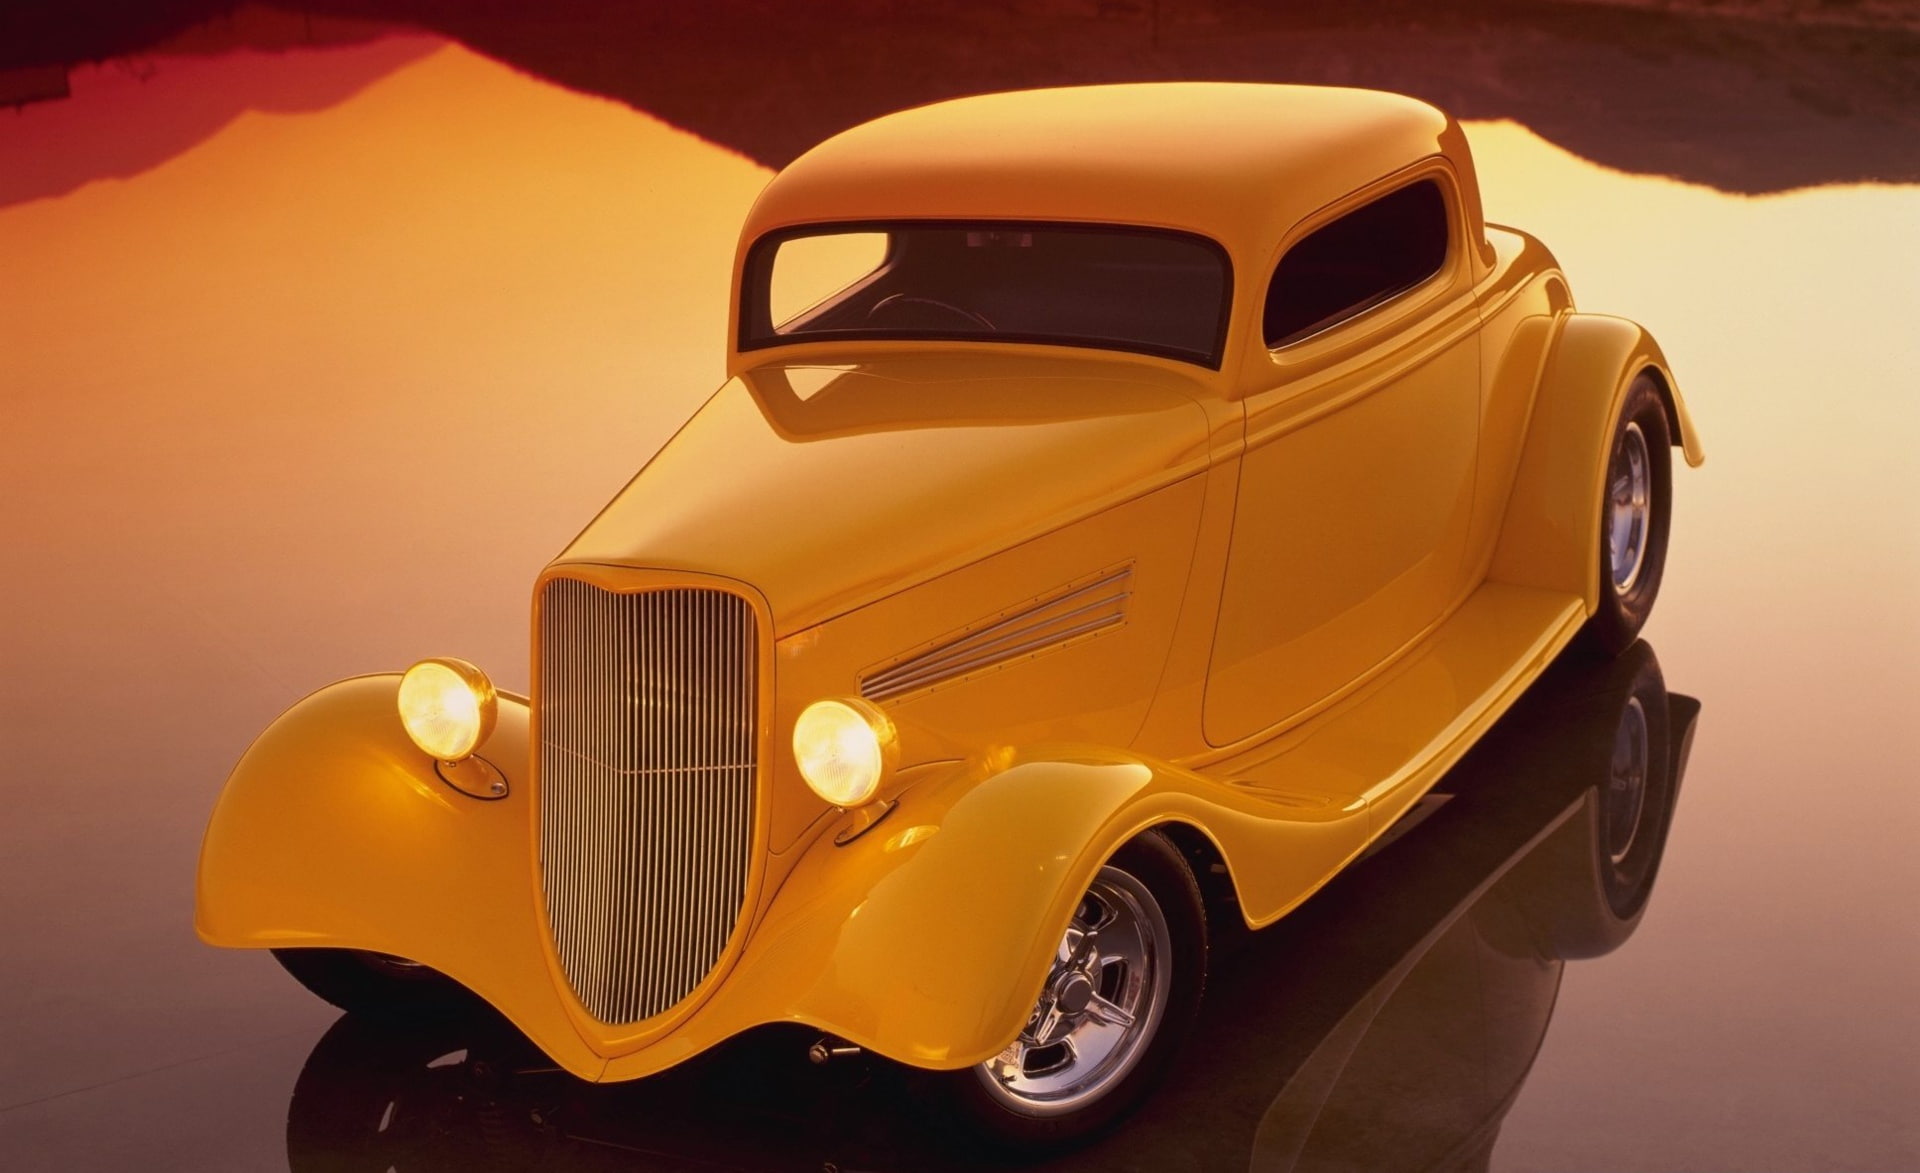 Classic Hot Rod Car, classic yellow coupe illustration, Motors